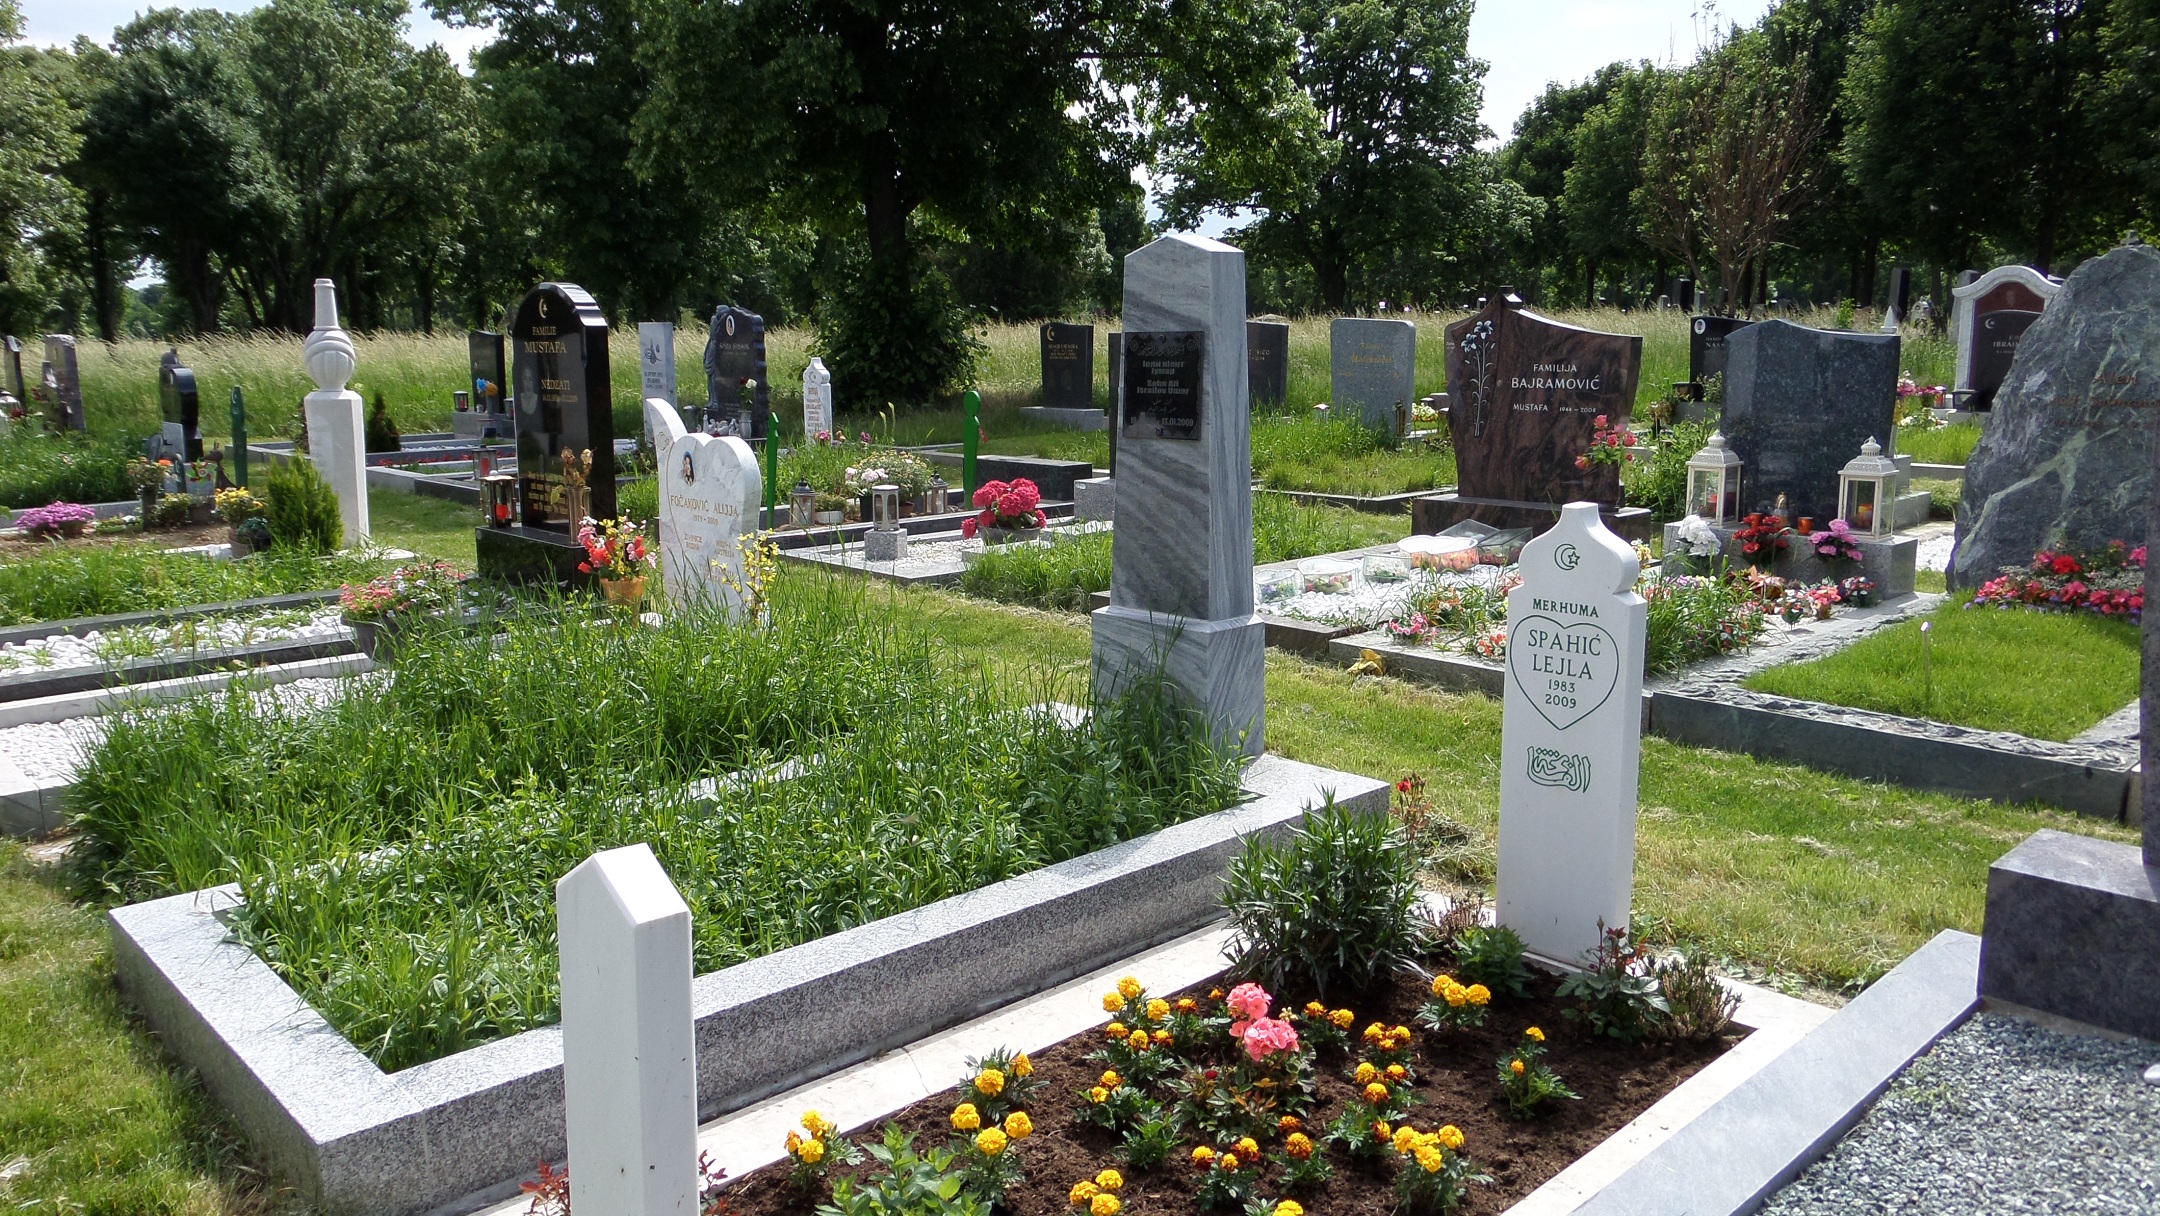 Arab temető